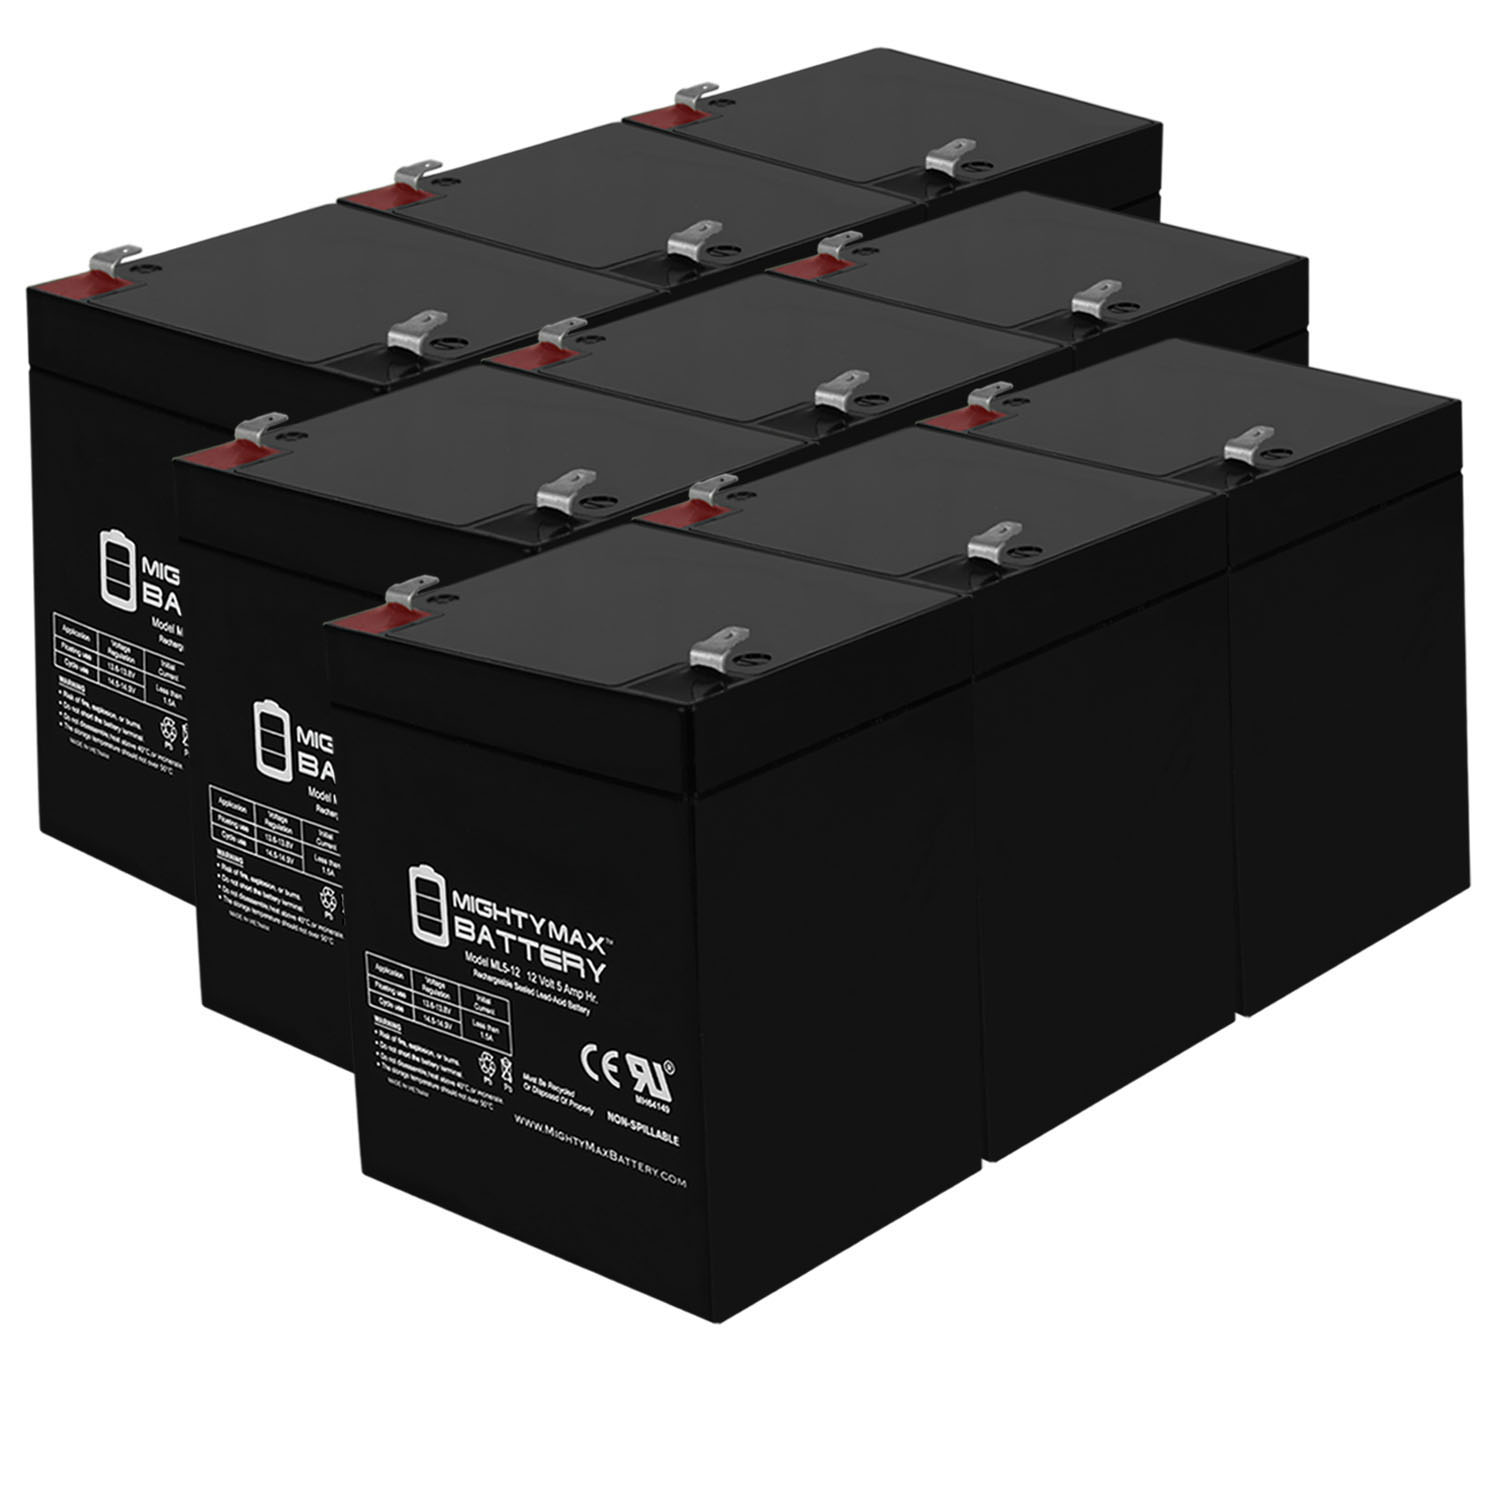 12V 5AH SLA Replacement Battery for Razor E175 Red 13111259 - 9 Pack